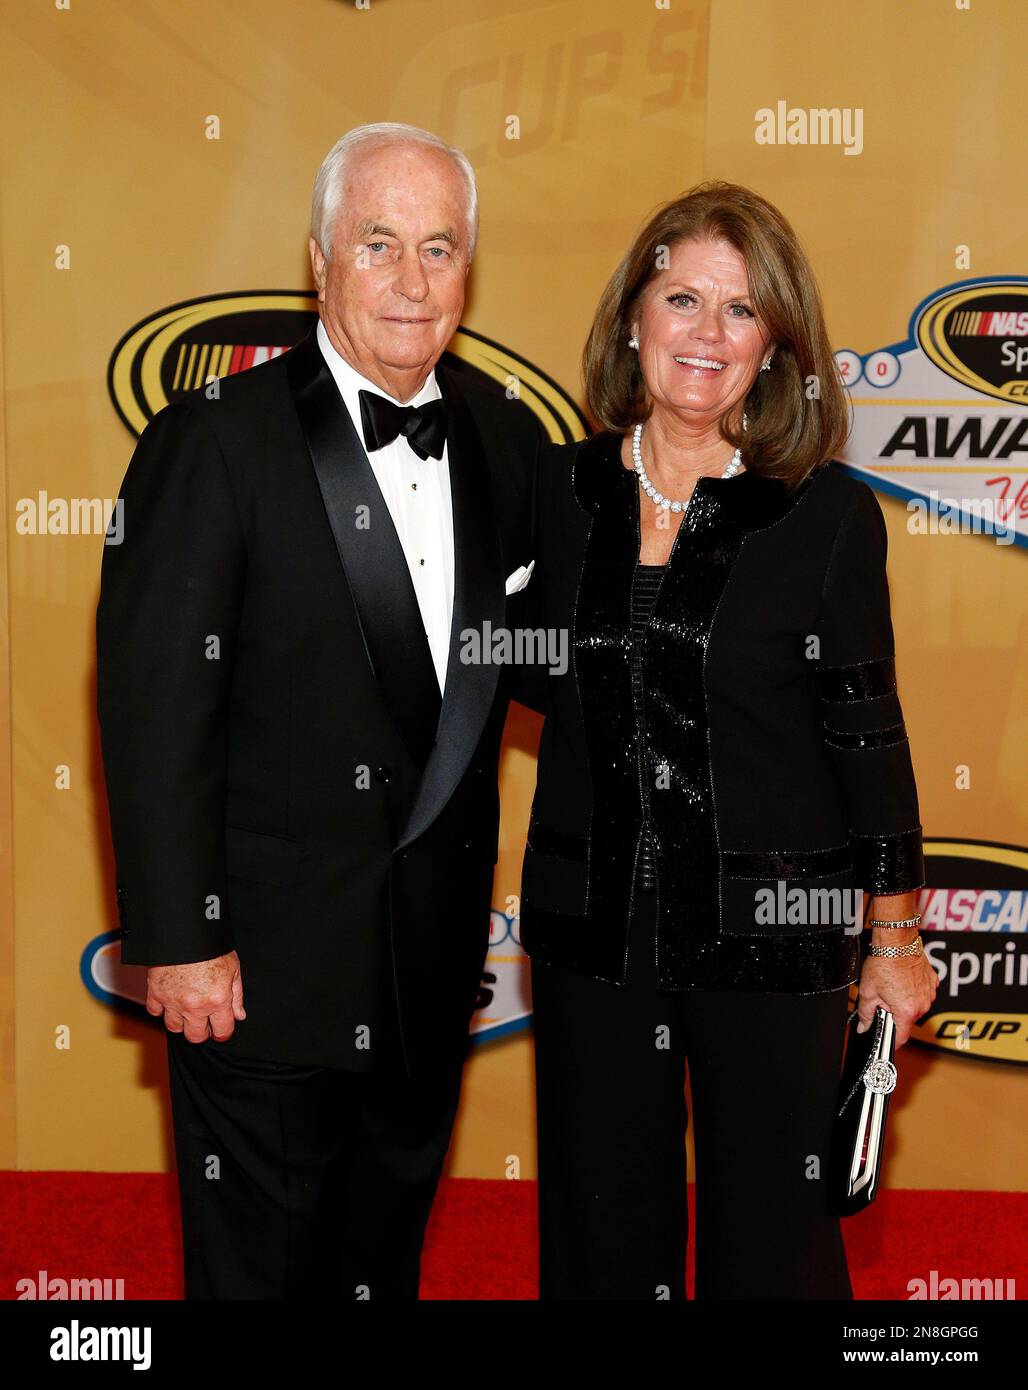 Roger Penske, left, and Kathy Penske arrive for the NASCAR Sprint Cup Series auto racing awards on Friday, Nov. 30, 2012, in Las Vegas. (AP Photo/Isaac Brekken) Stock Photo